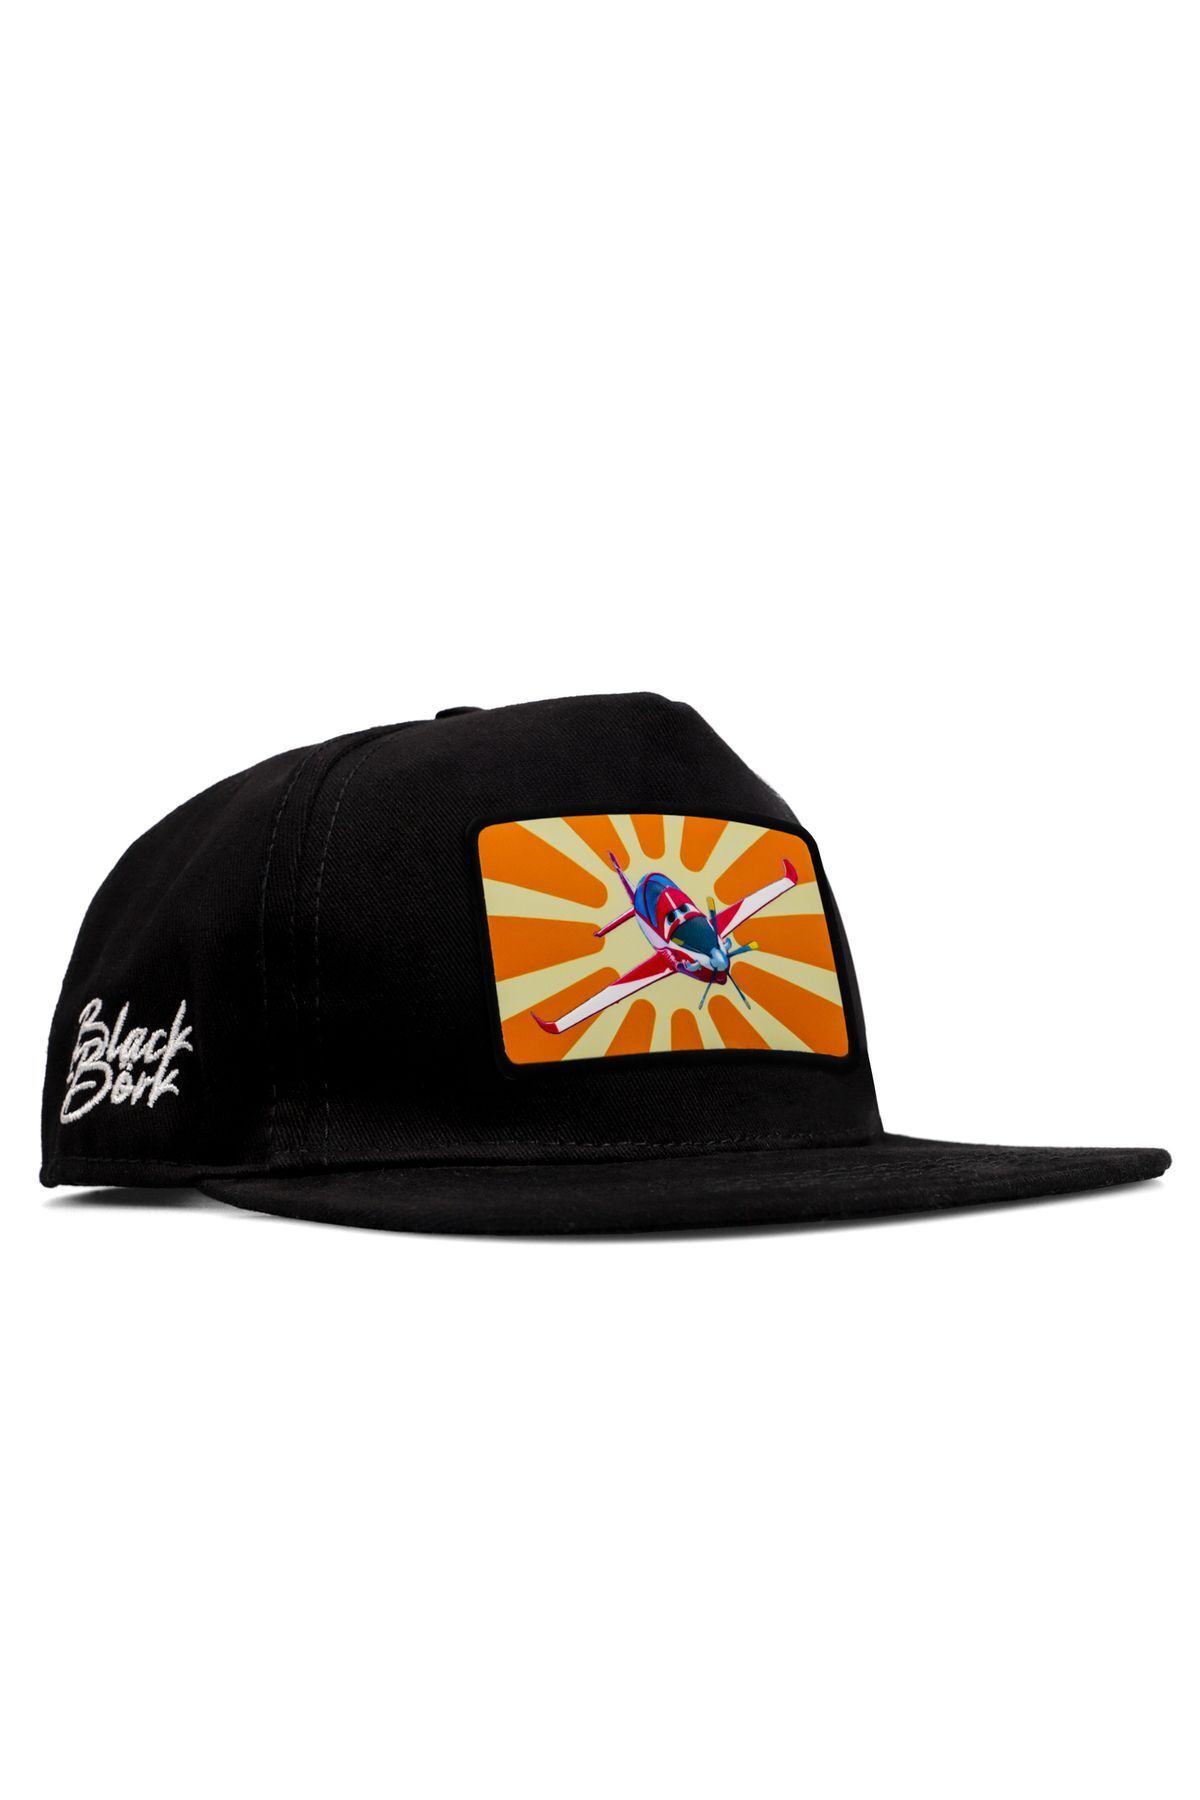 BlackBörk V2 Hip Hop Kids Güneş Hürkuş Lisanlı Siyah Çocuk Şapka